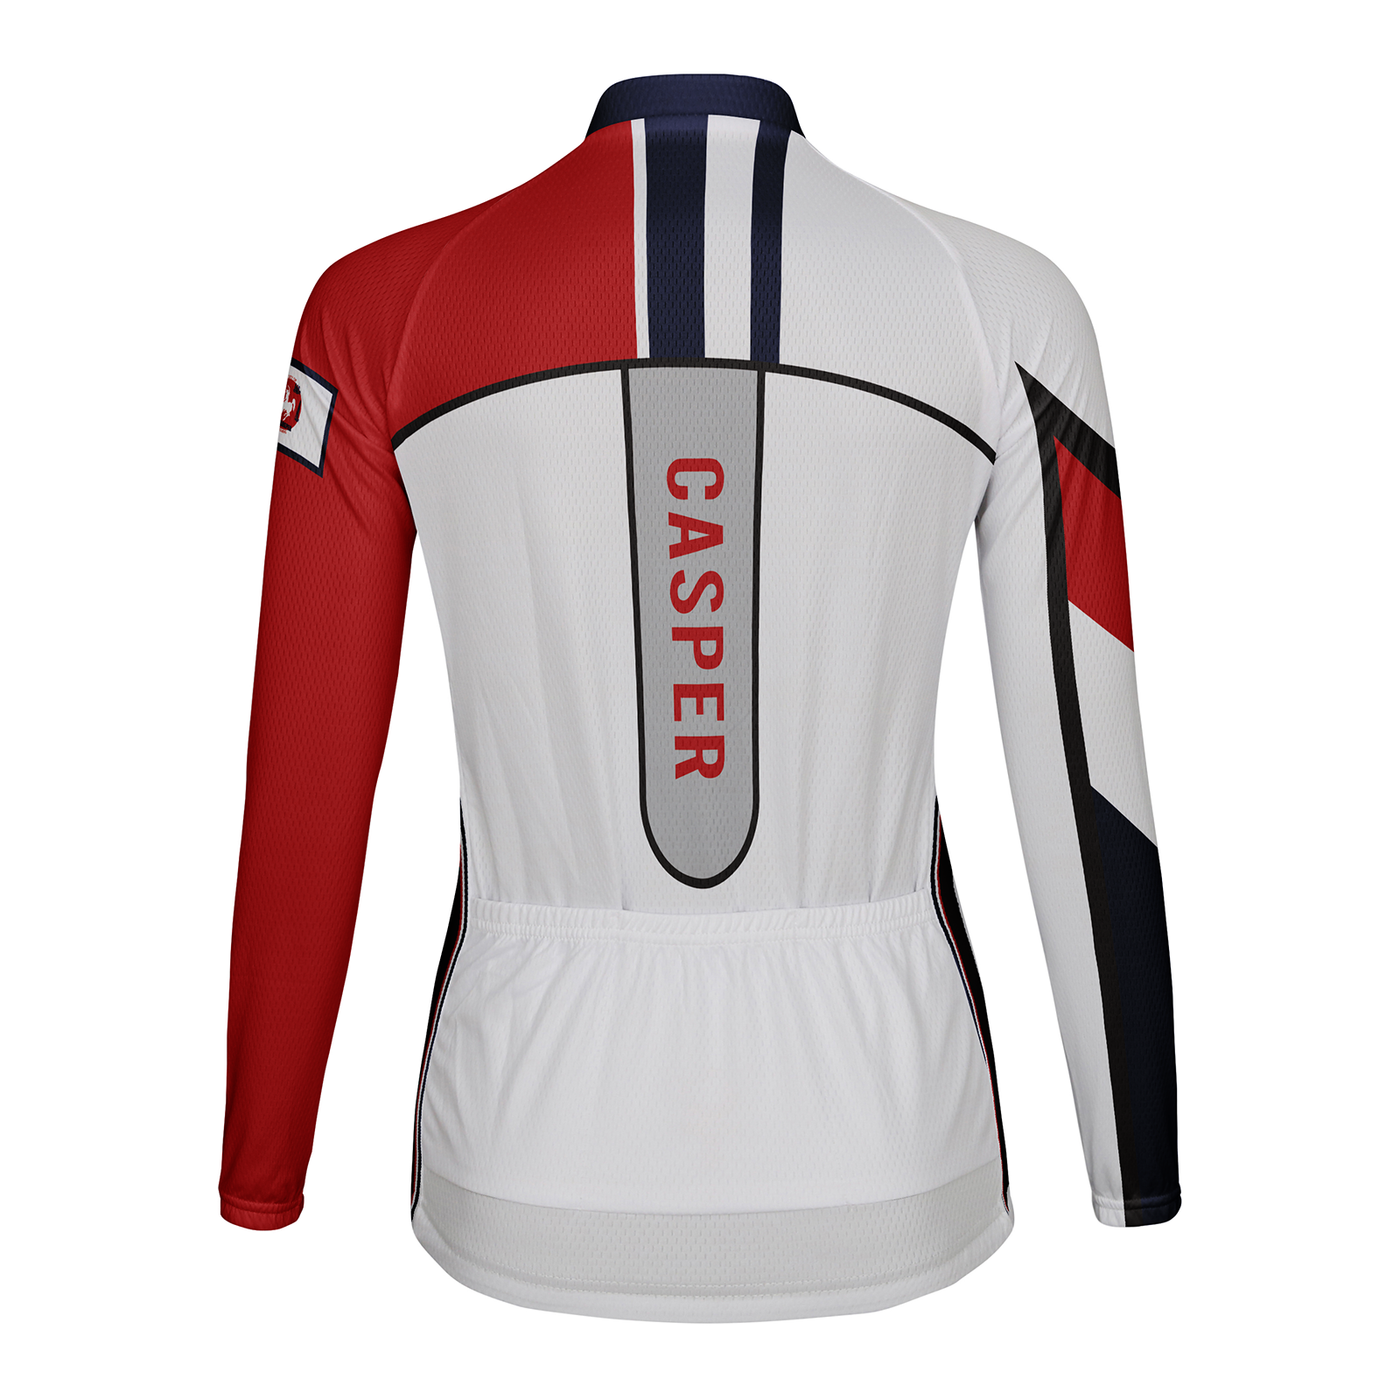 Customized Casper Women's Cycling Jersey Long Sleeve